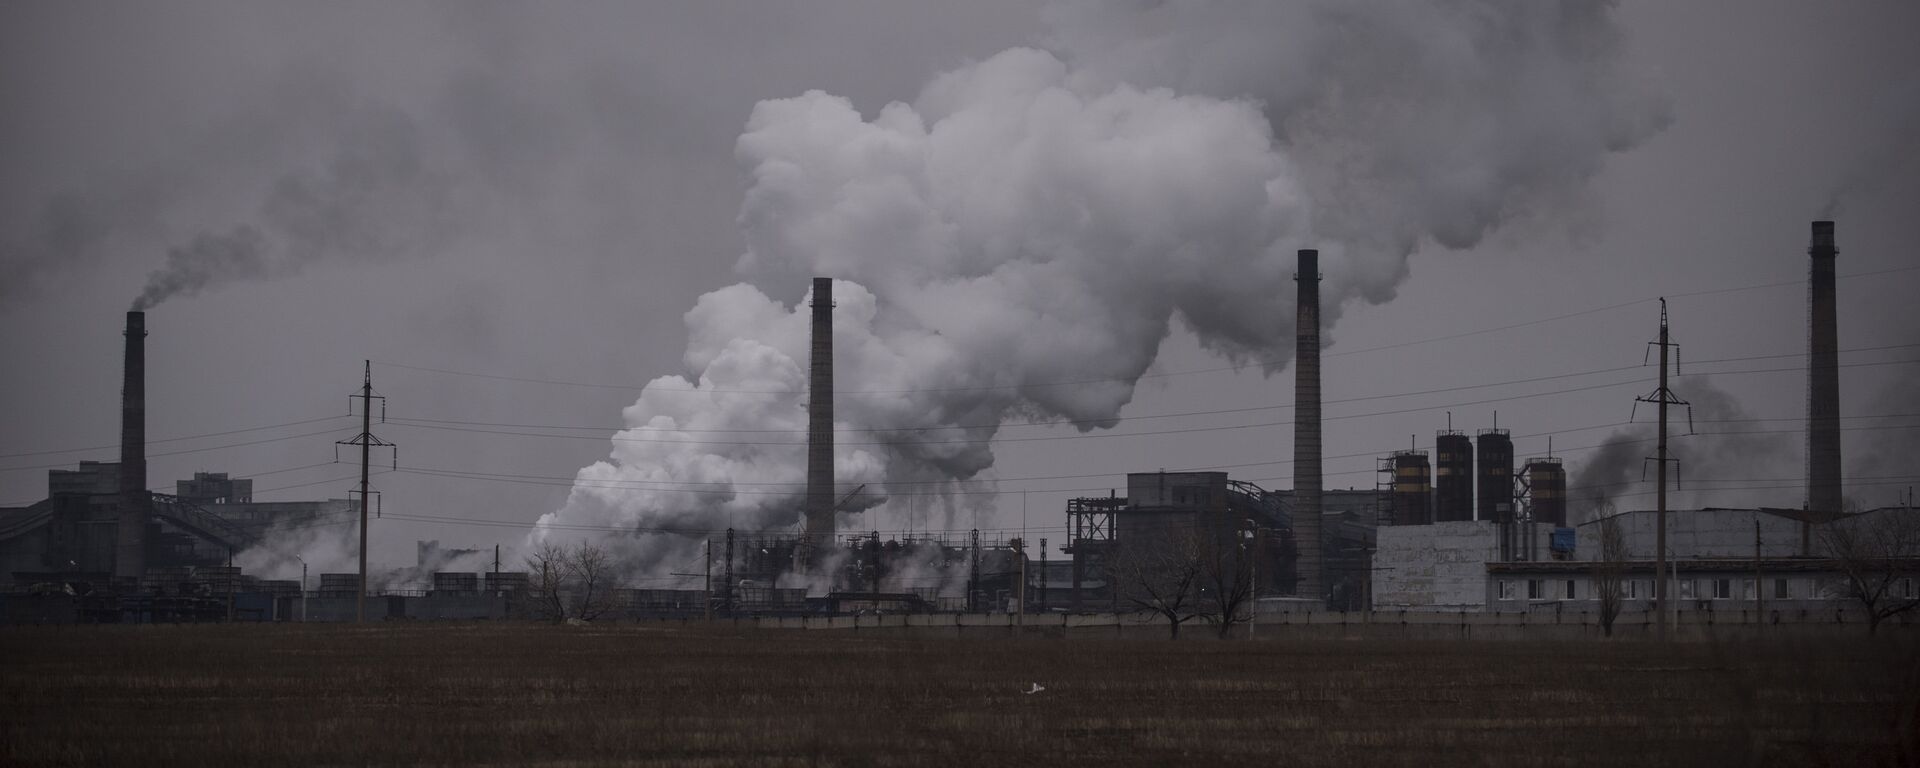 Smoke rises from the chemical plant in Avdiivka, eastern Ukraine (File) - Sputnik International, 1920, 08.04.2022